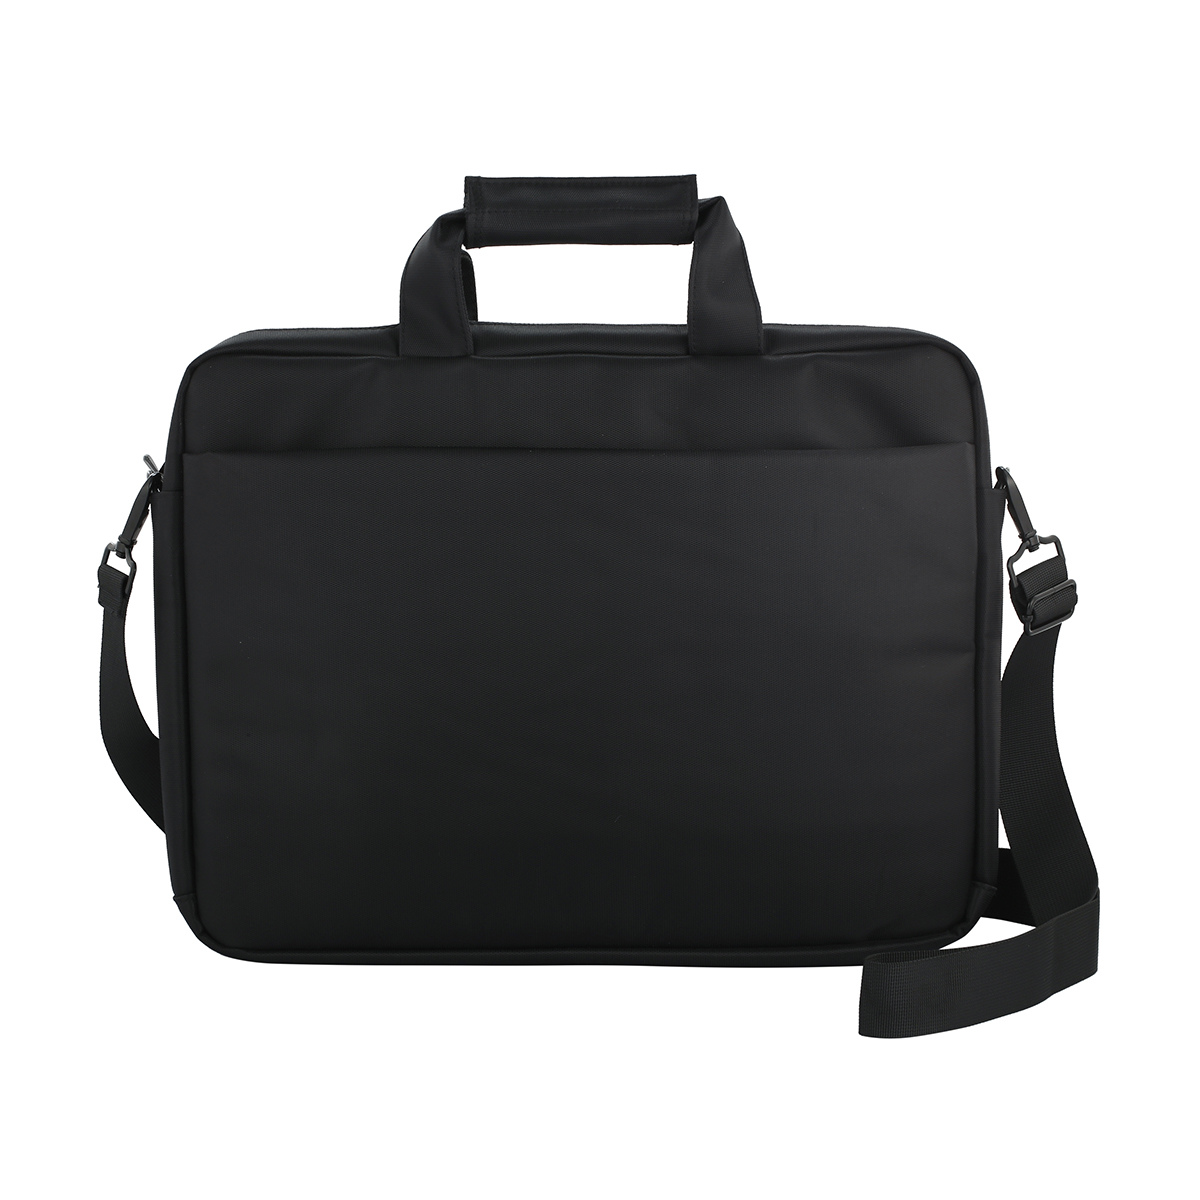 15in. Padded Laptop Bag Black Canvas | Kmart